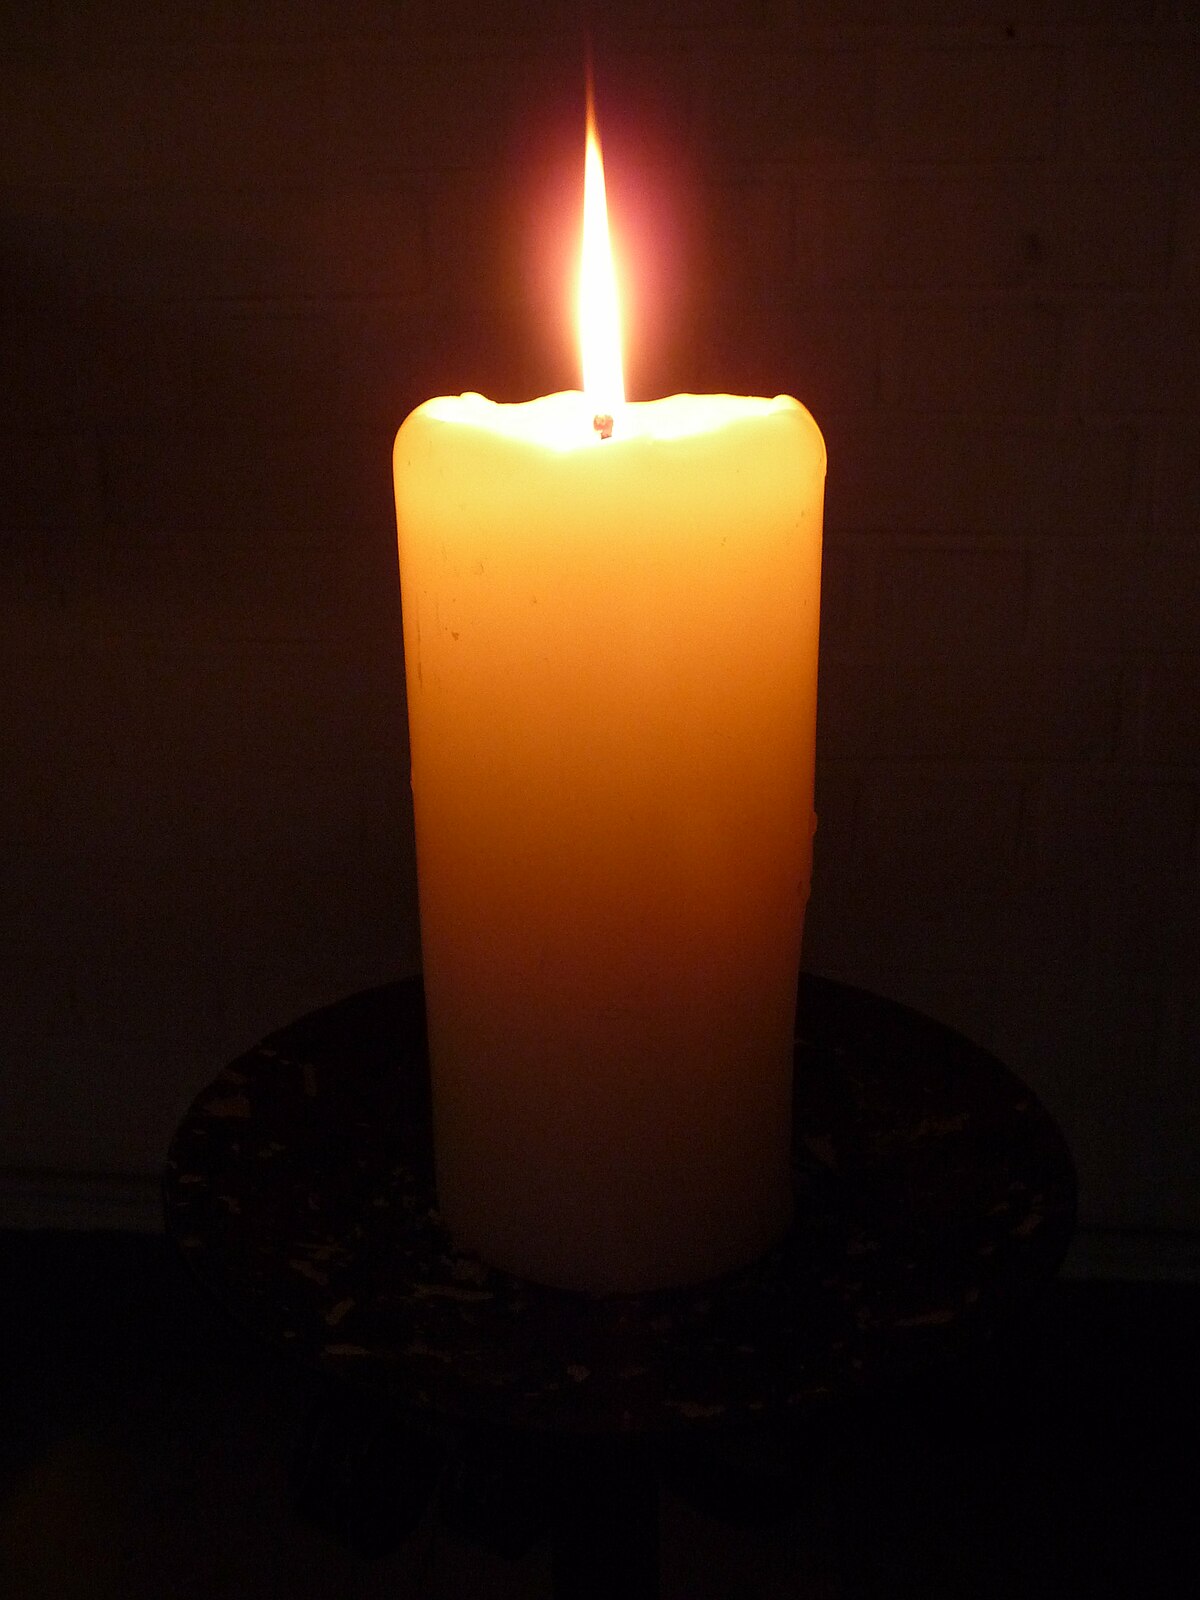 Candle - Wikipedia